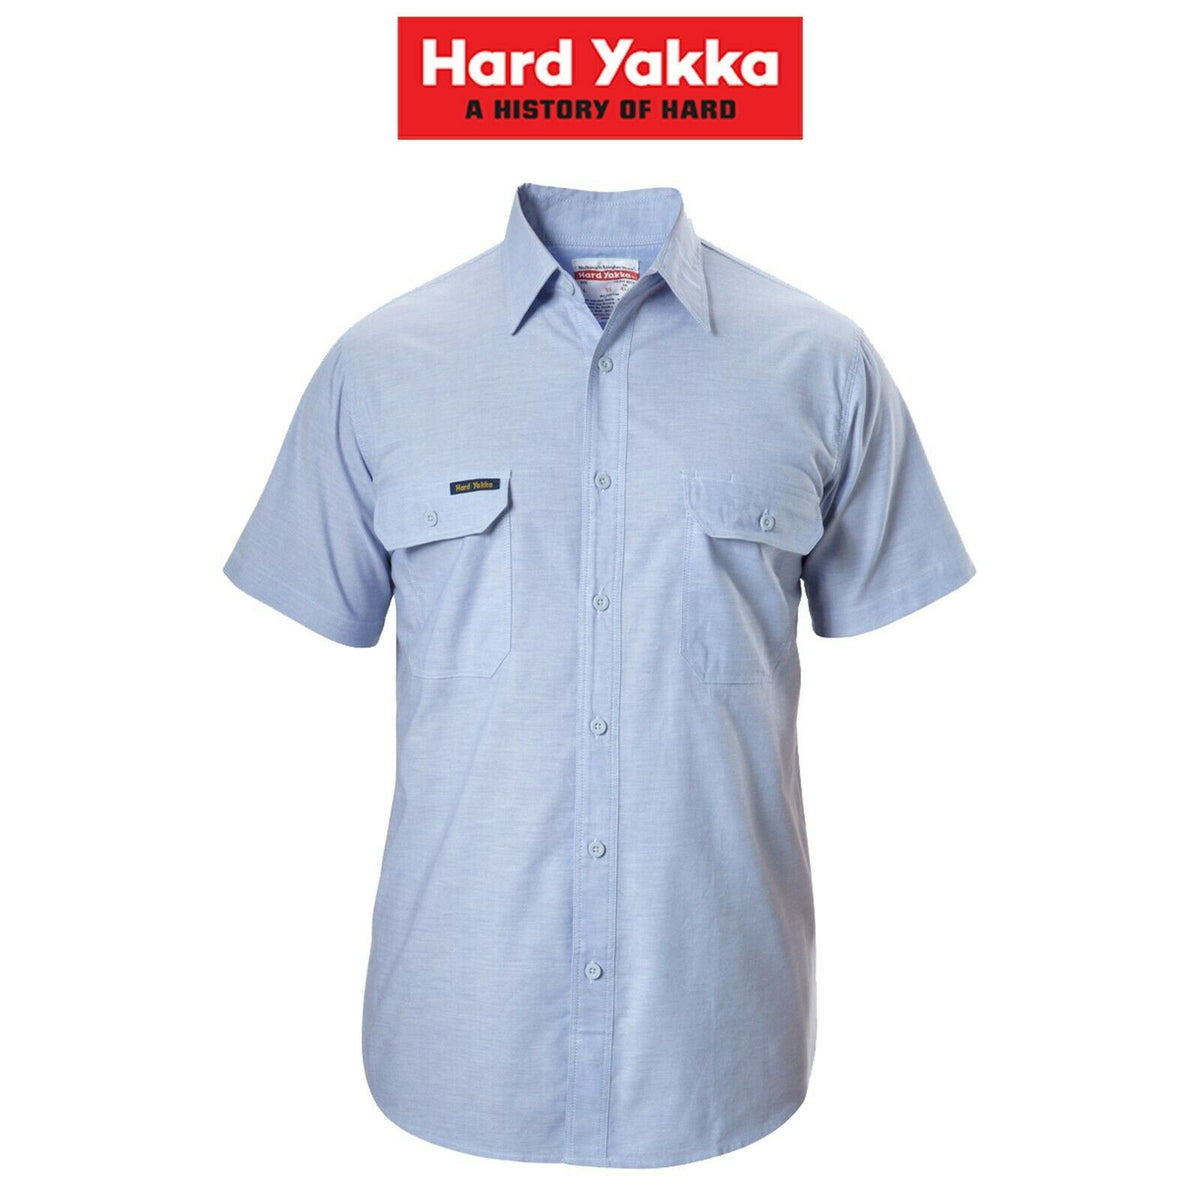 Hard Yakka Short Sleeve Chambray Light Cotton Business Work Shirt Y07529